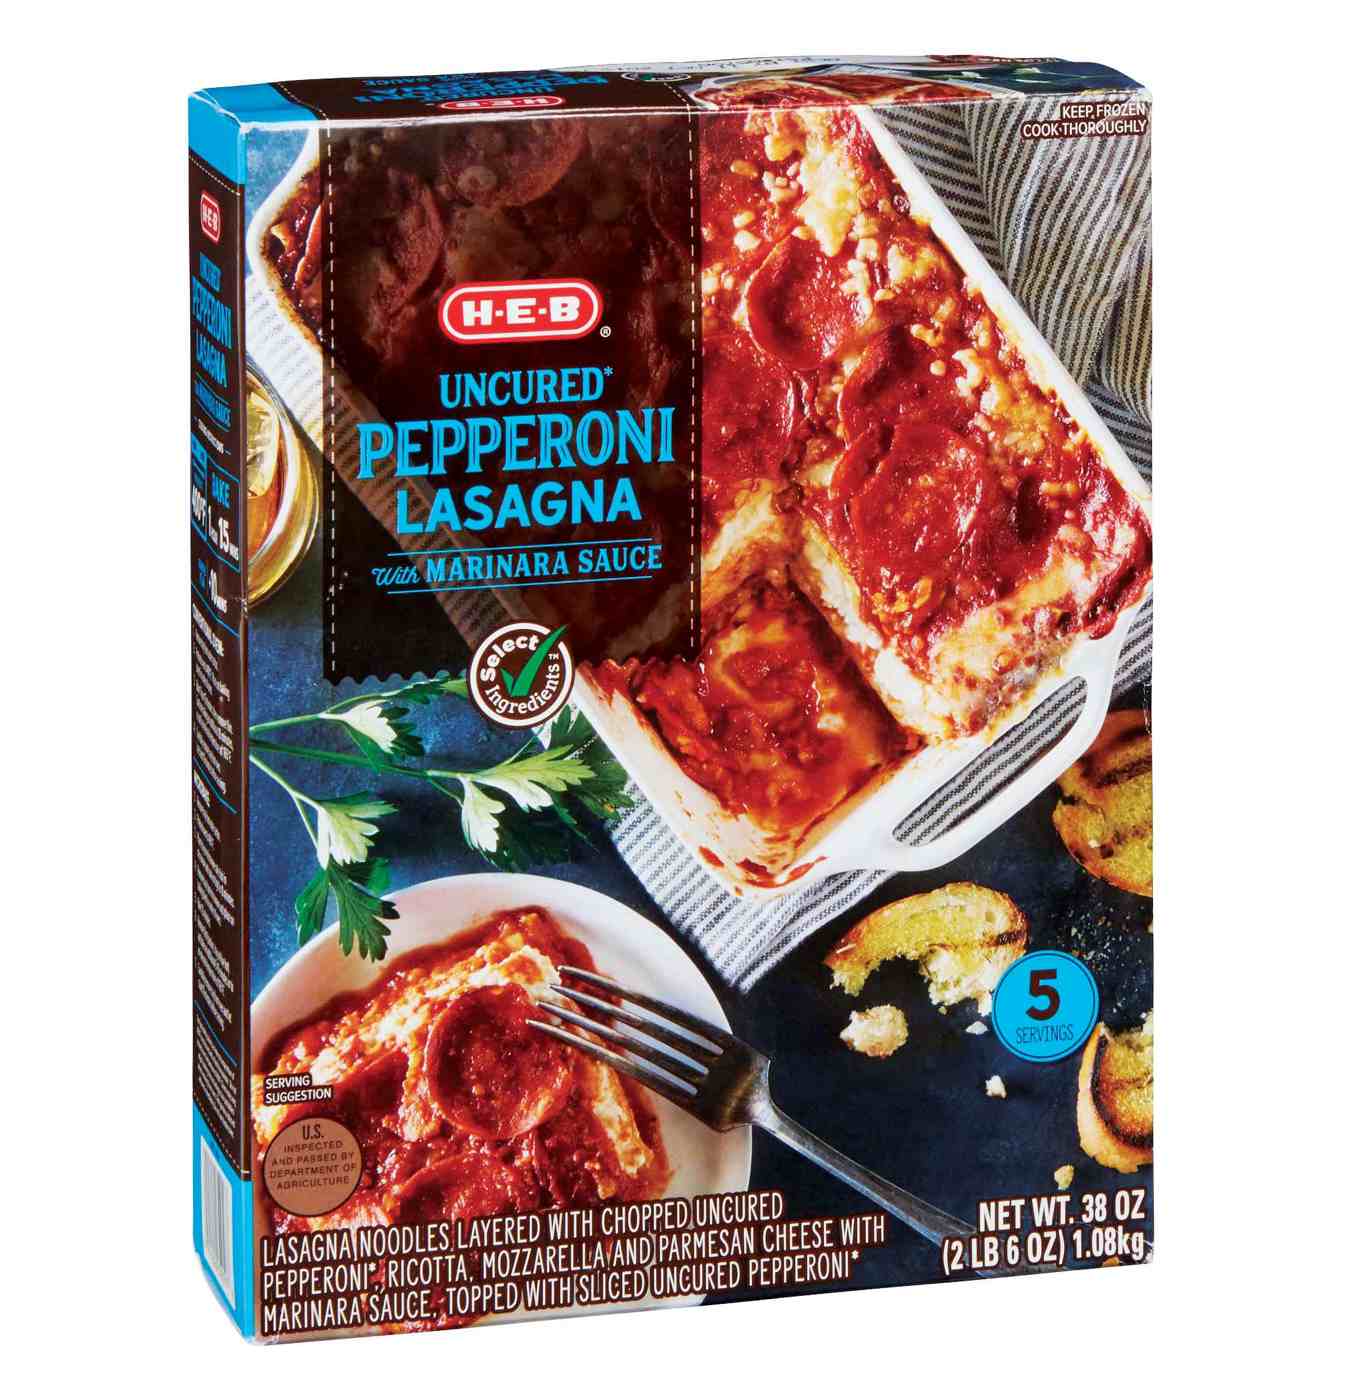 H-E-B Frozen Uncured Pepperoni Lasagna; image 1 of 2